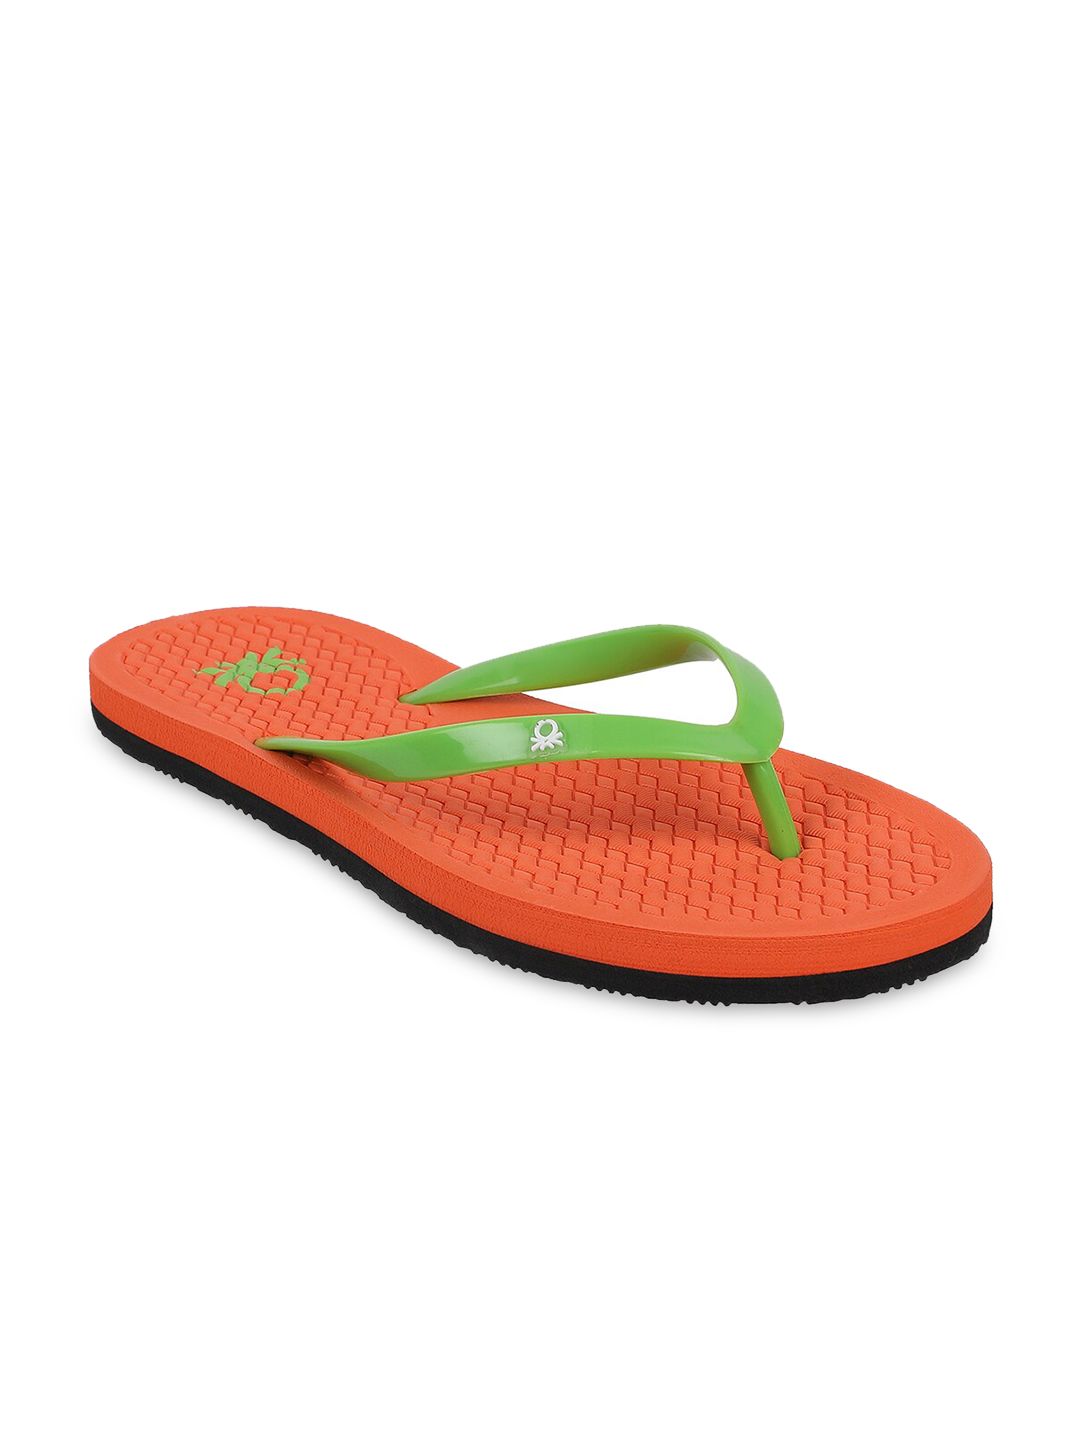 United Colors of Benetton Women Orange & Green Textured Thong Flip Flops Price in India